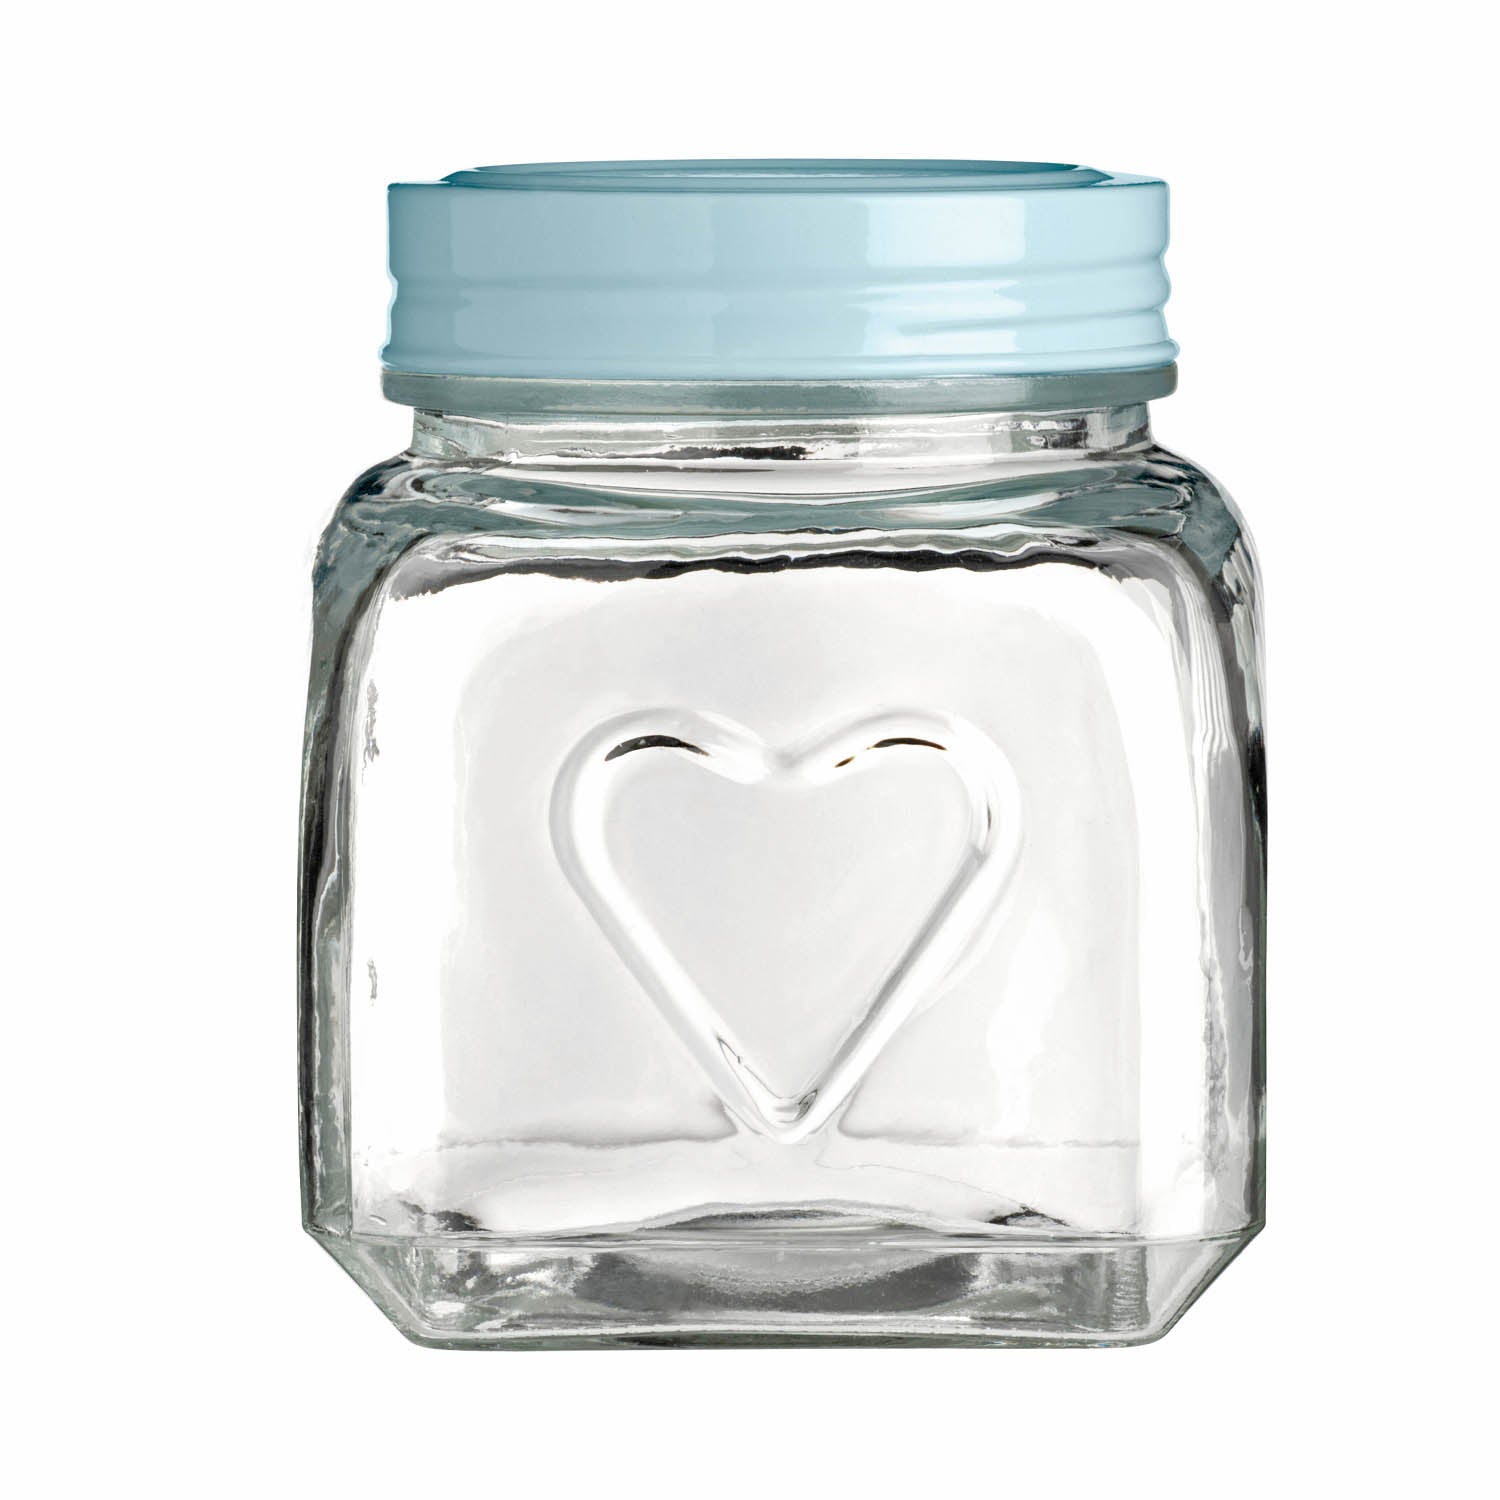 900ml Embossed Heart Glass Storage Jar Aqua Blue Lid